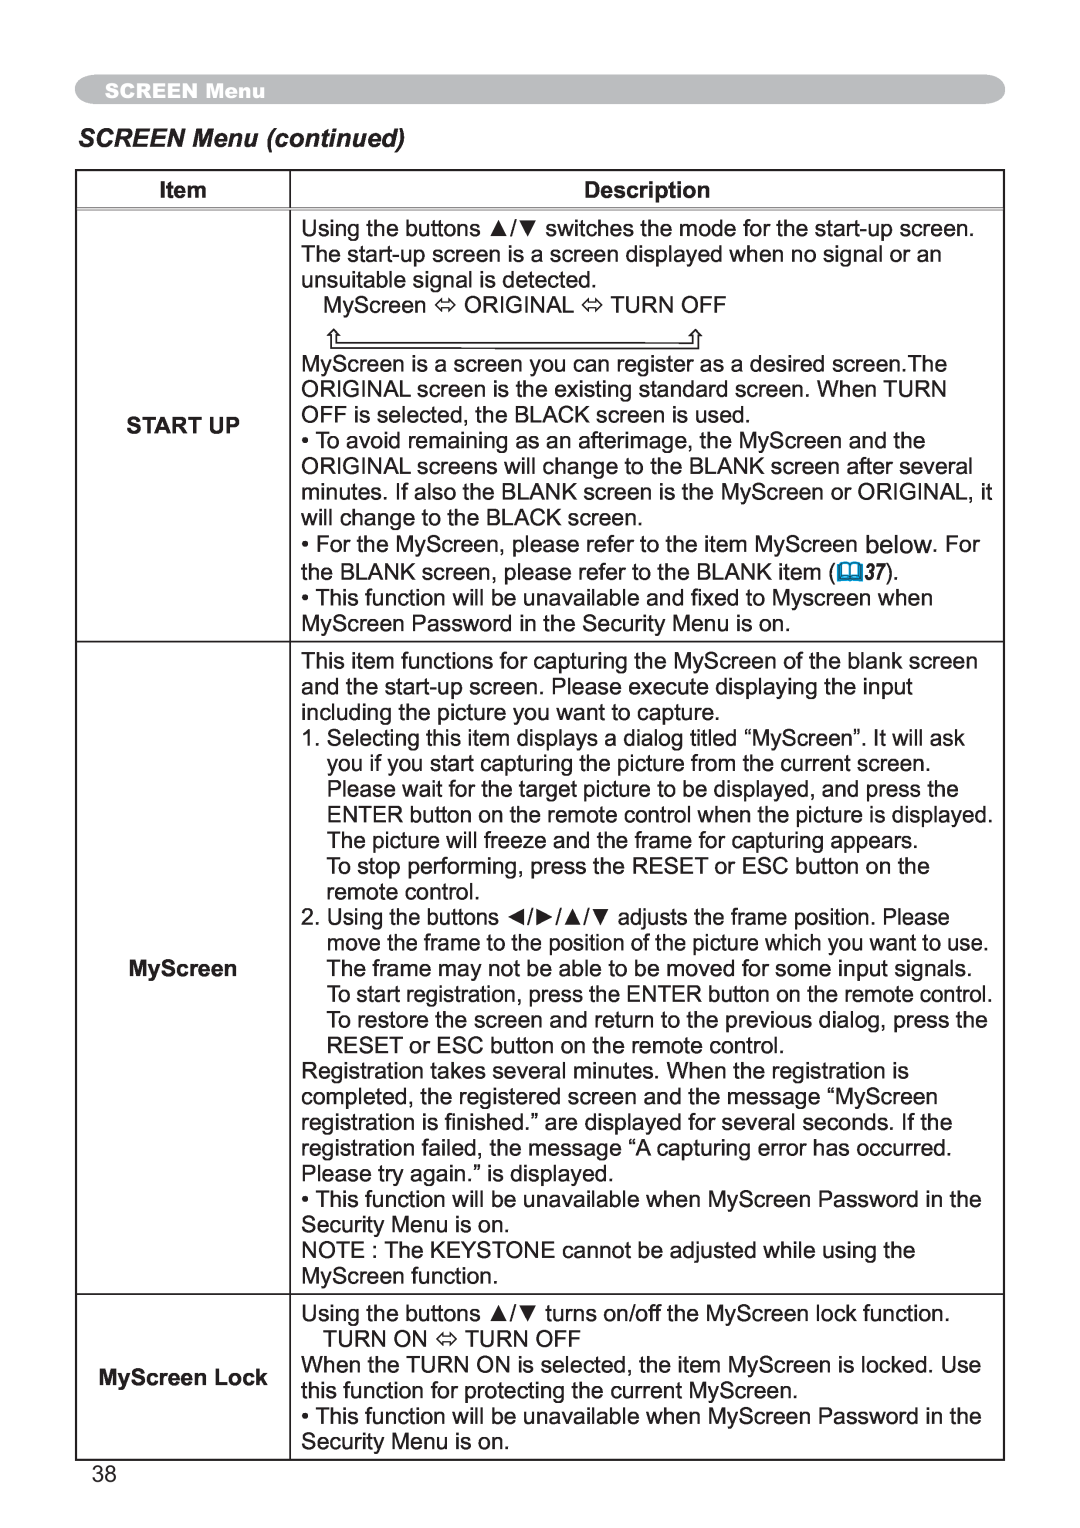 Hitachi CP-X251 user manual SCREEN Menu continued, Description, Start Up, MyScreen Lock 